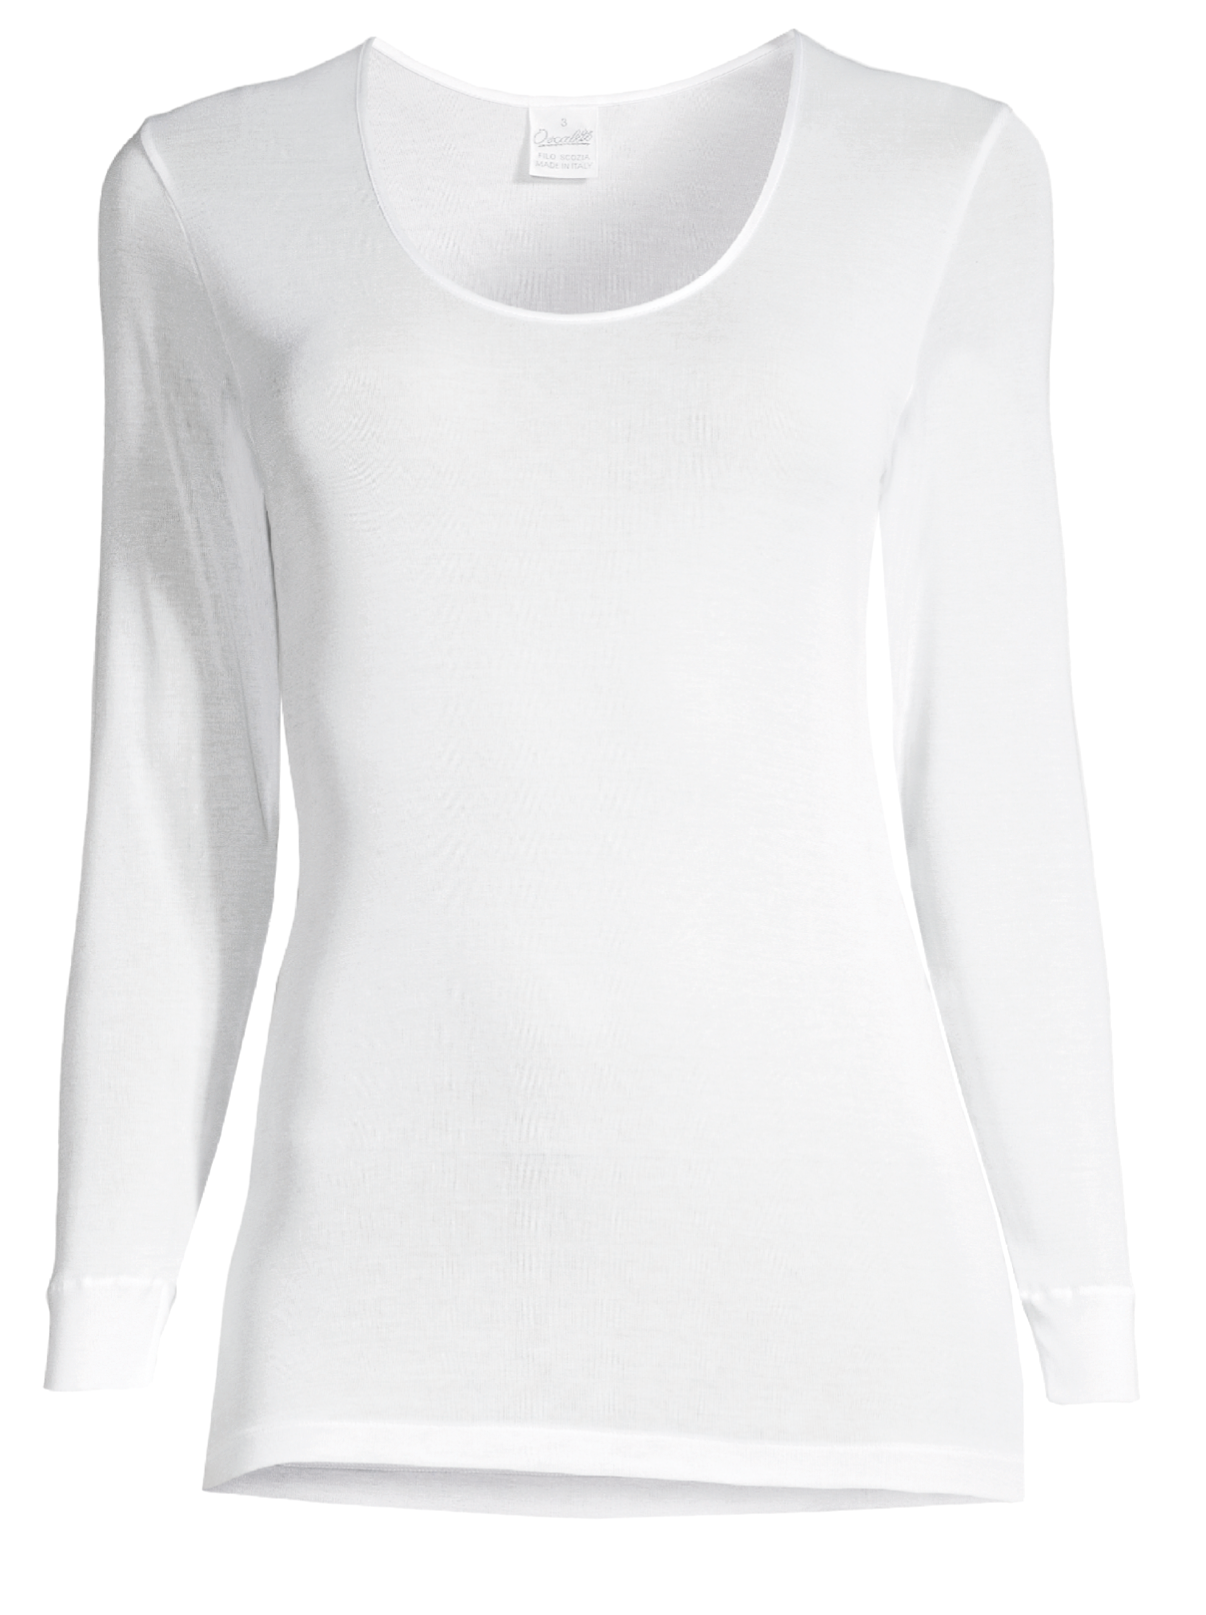 White Filoscozia Long-Sleeved round neck Shirt